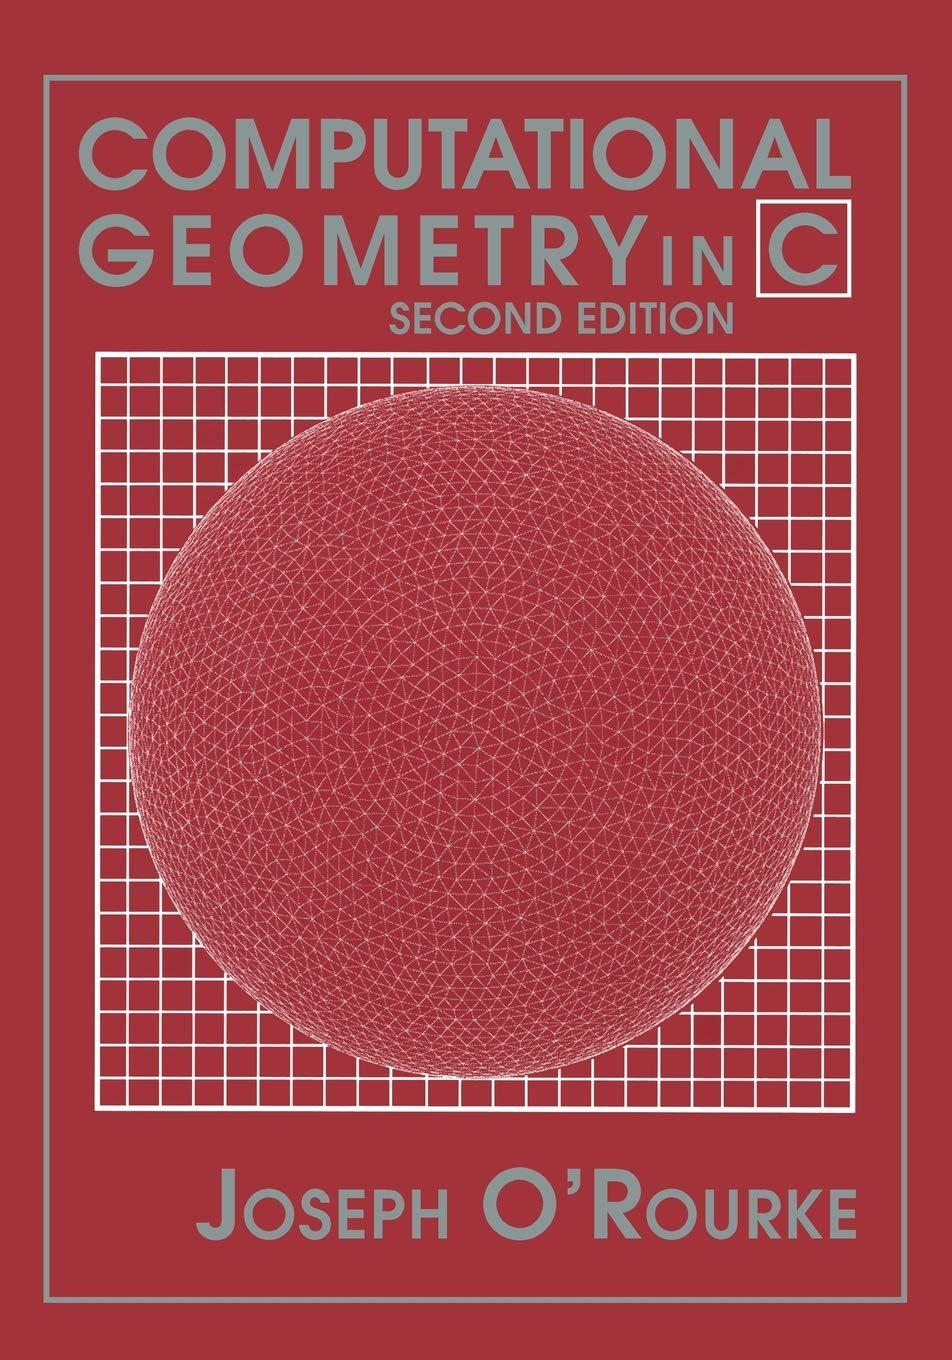 computational geometry in c 2nd edition joseph o'rourke 0521649765, 978-0521649766